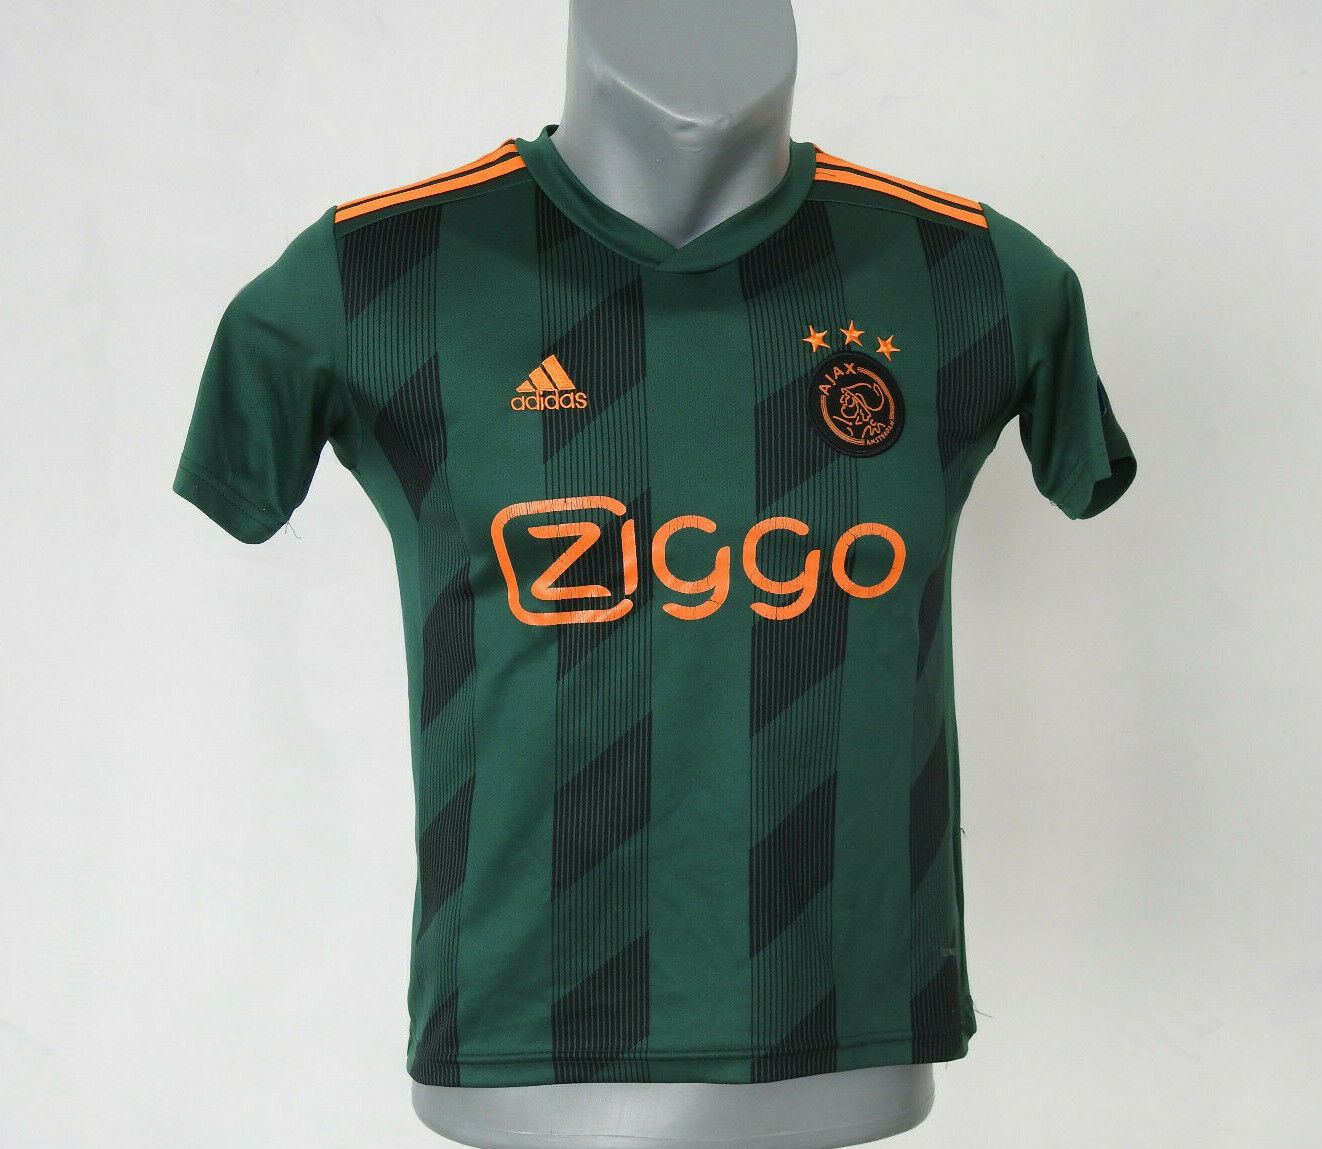 Verloren schedel Arena Ajax Amsterdam 2019 2020 Away Jersey Adidas Green Shirt Size Boys S Football  CL | eBay